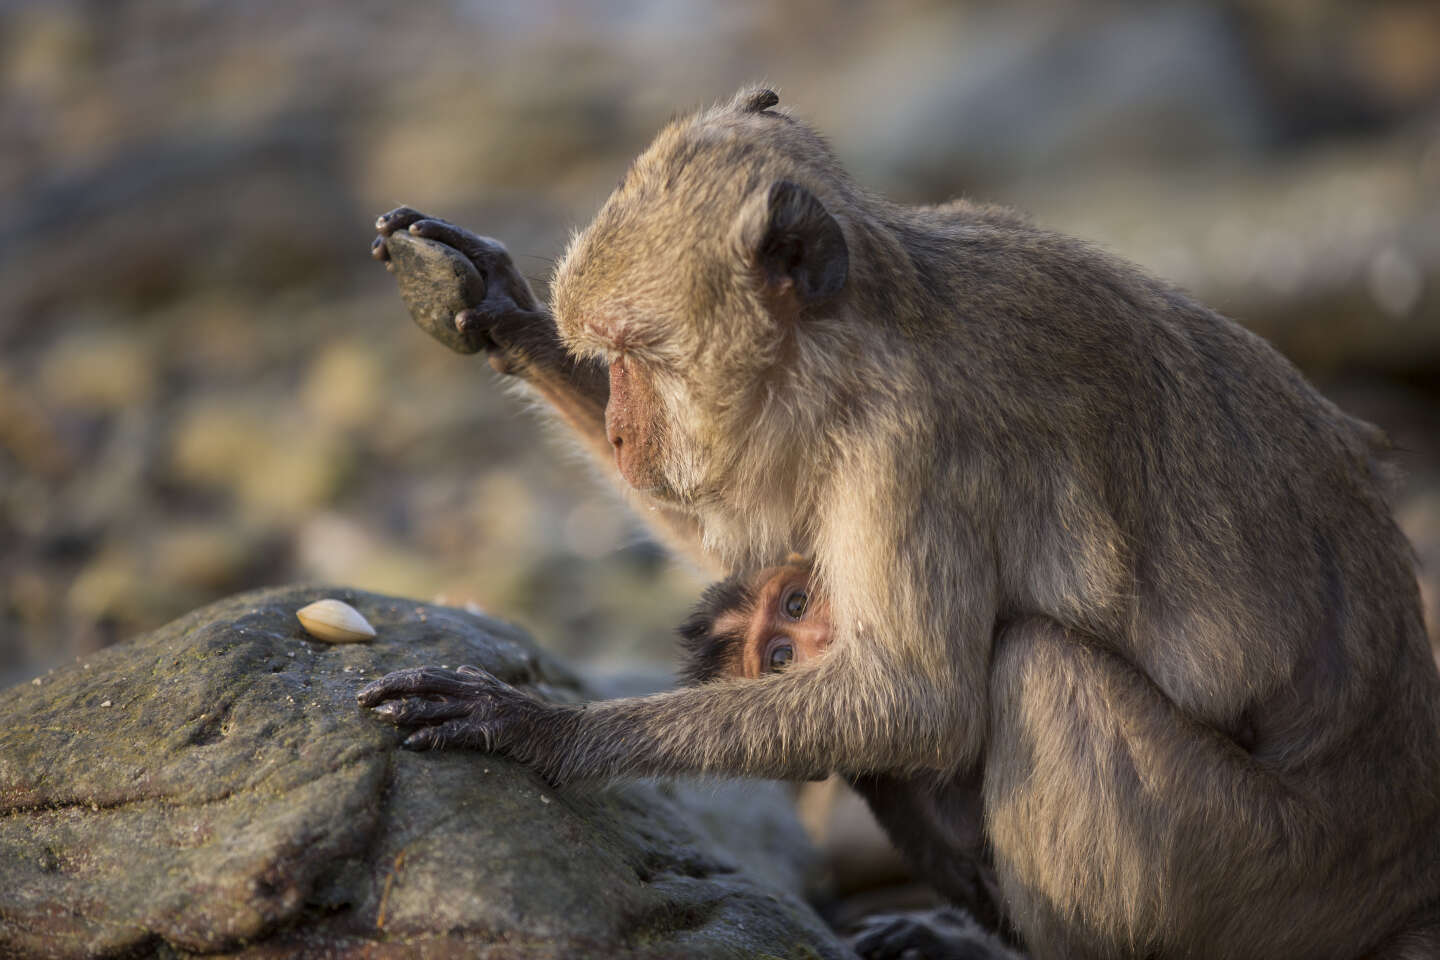 Monkeys shake up archeology by manipulating pebbles